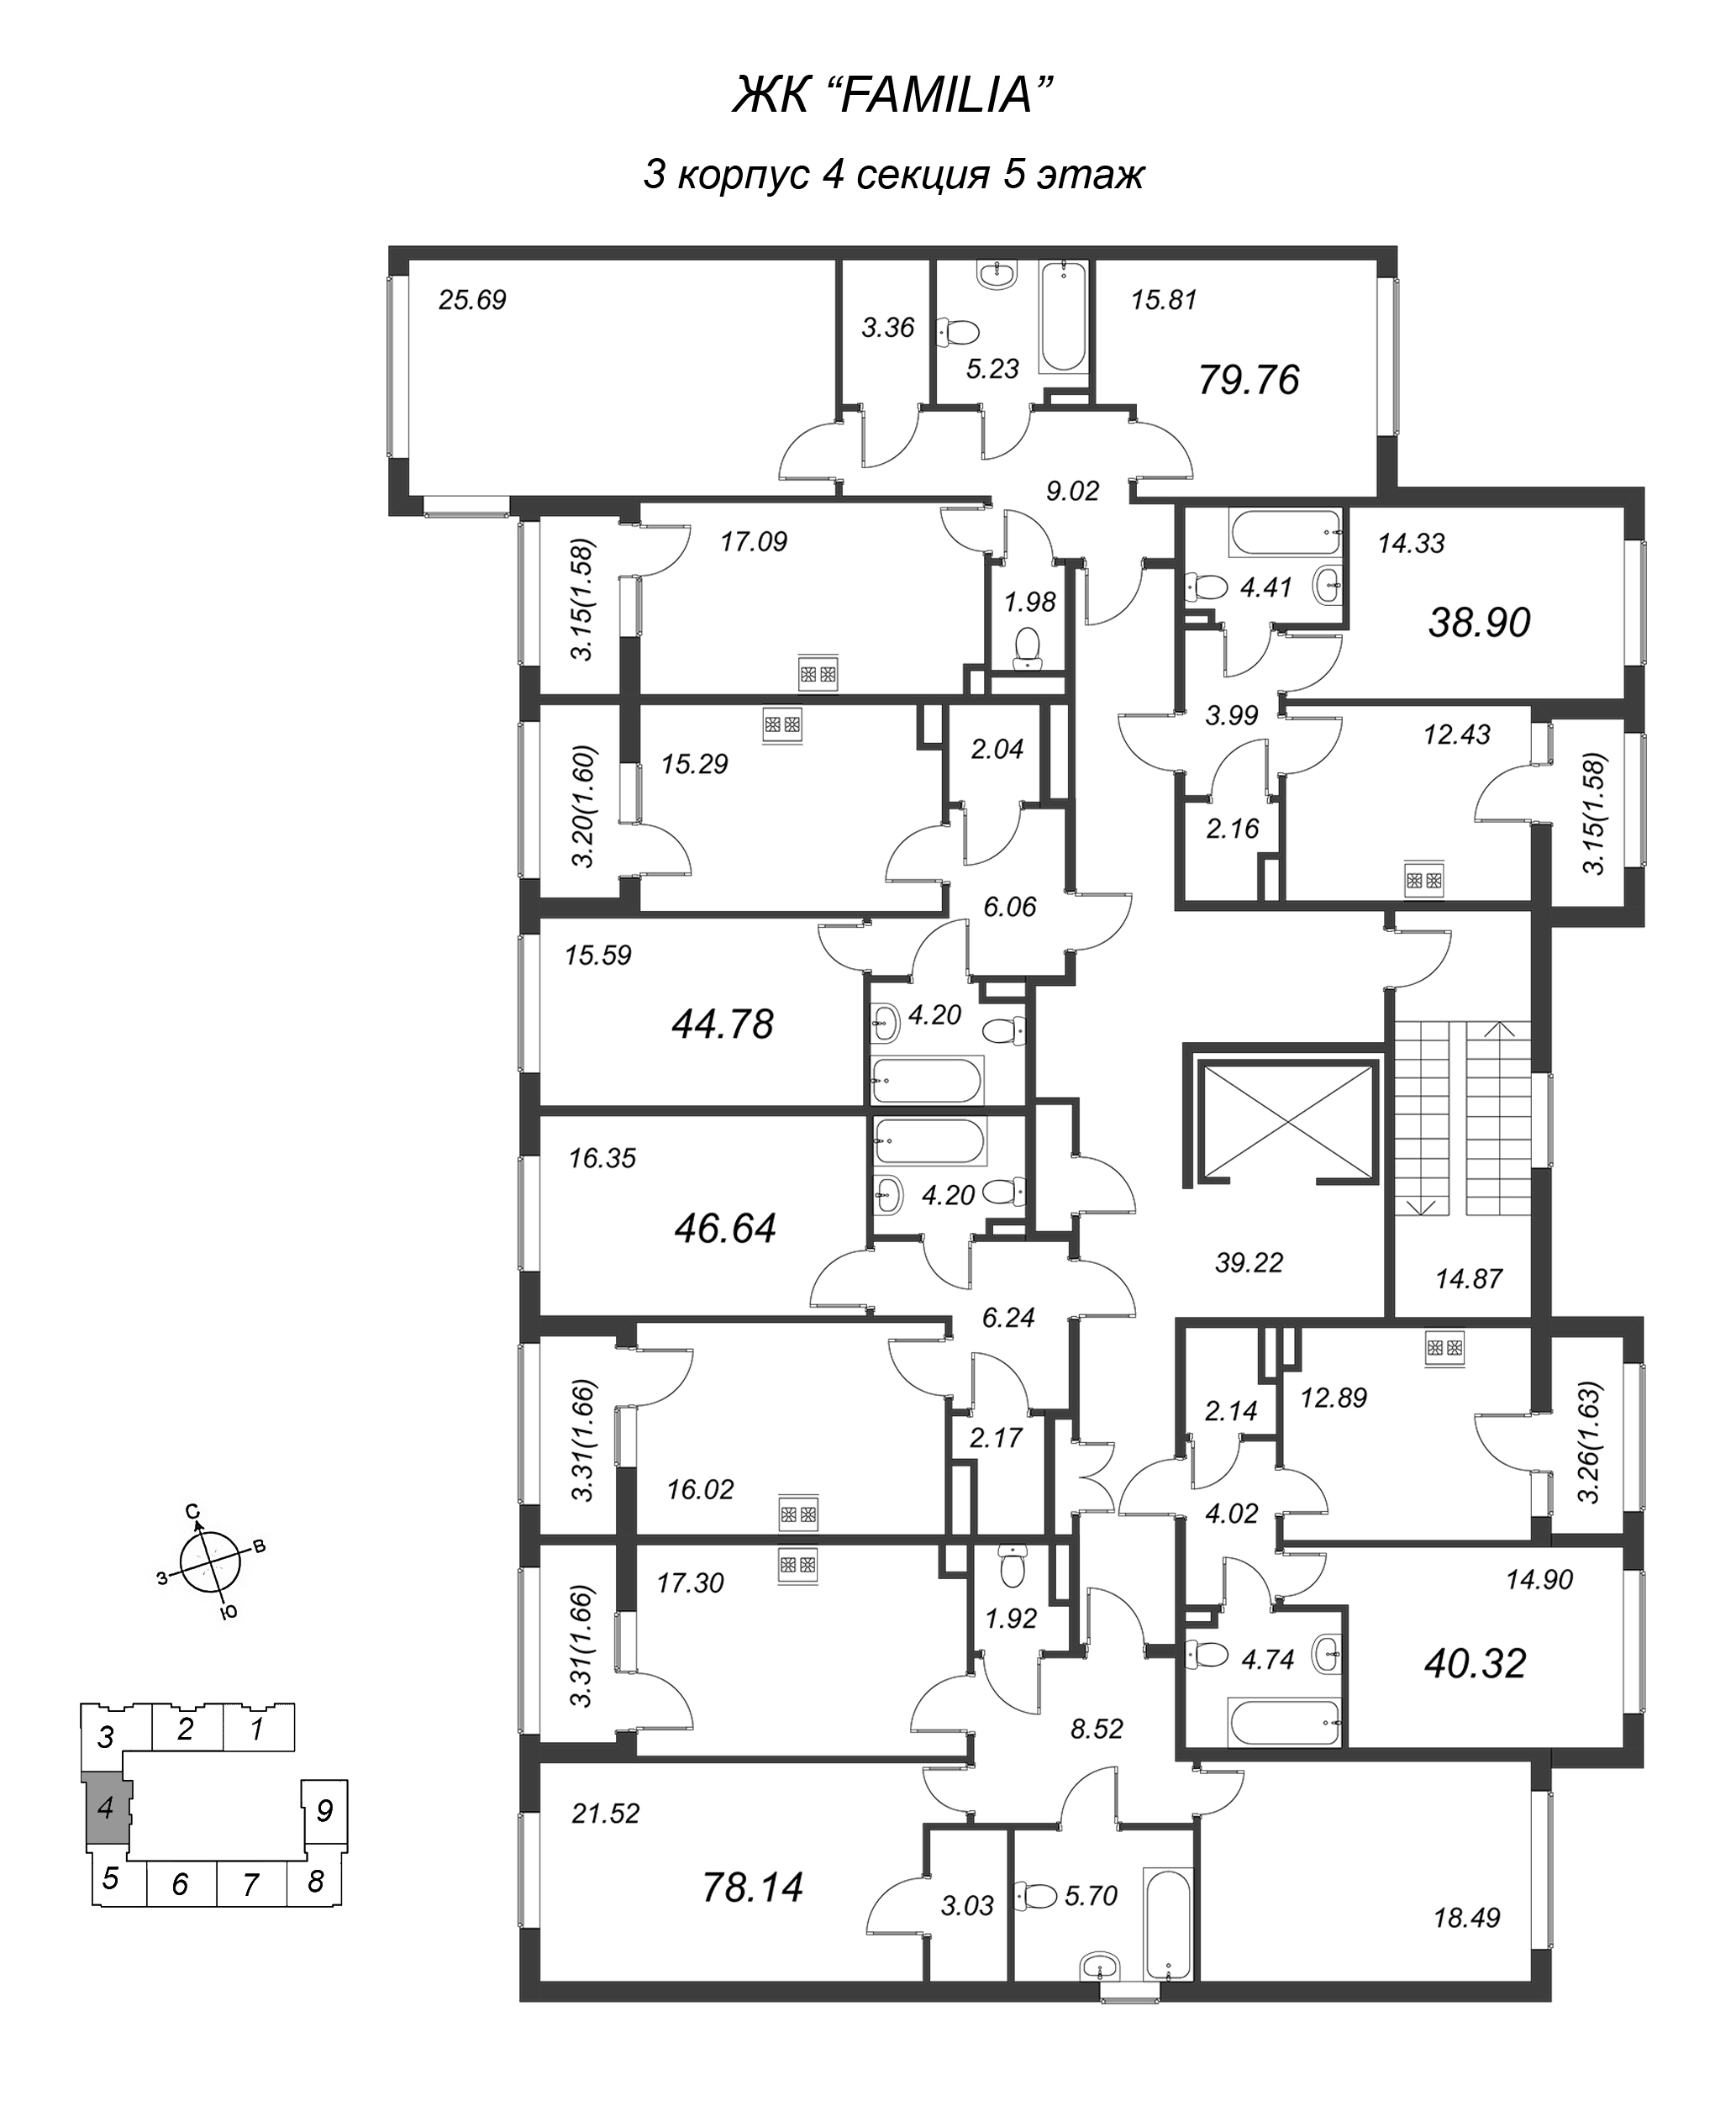 1-комнатная квартира, 40.4 м² в ЖК "FAMILIA" - планировка этажа